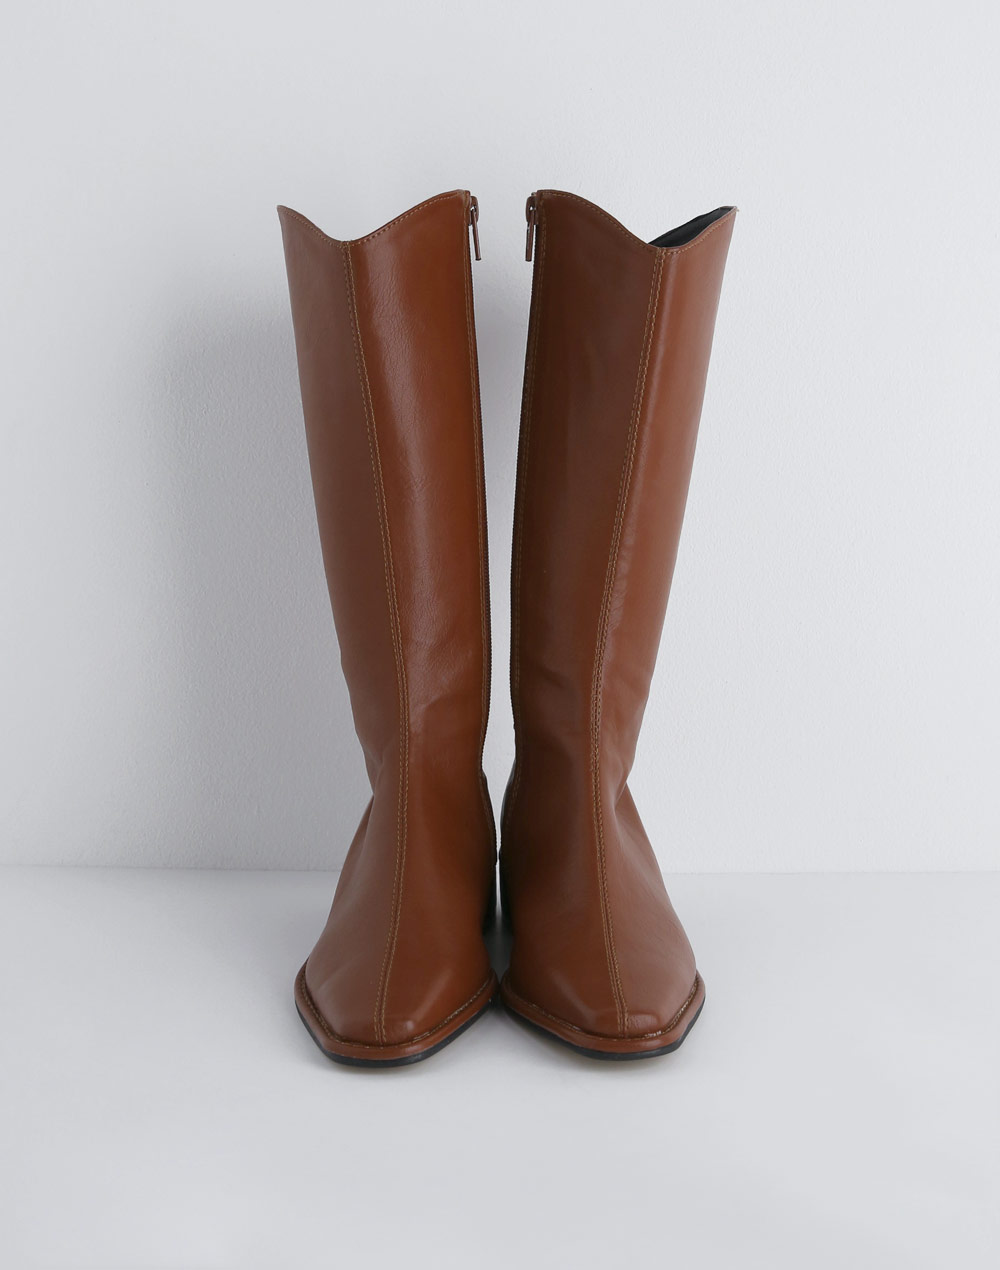 low heal half boots・s275844（シューズ/ブーツ）| futa_sakaguchi | 東京ガールズマーケット